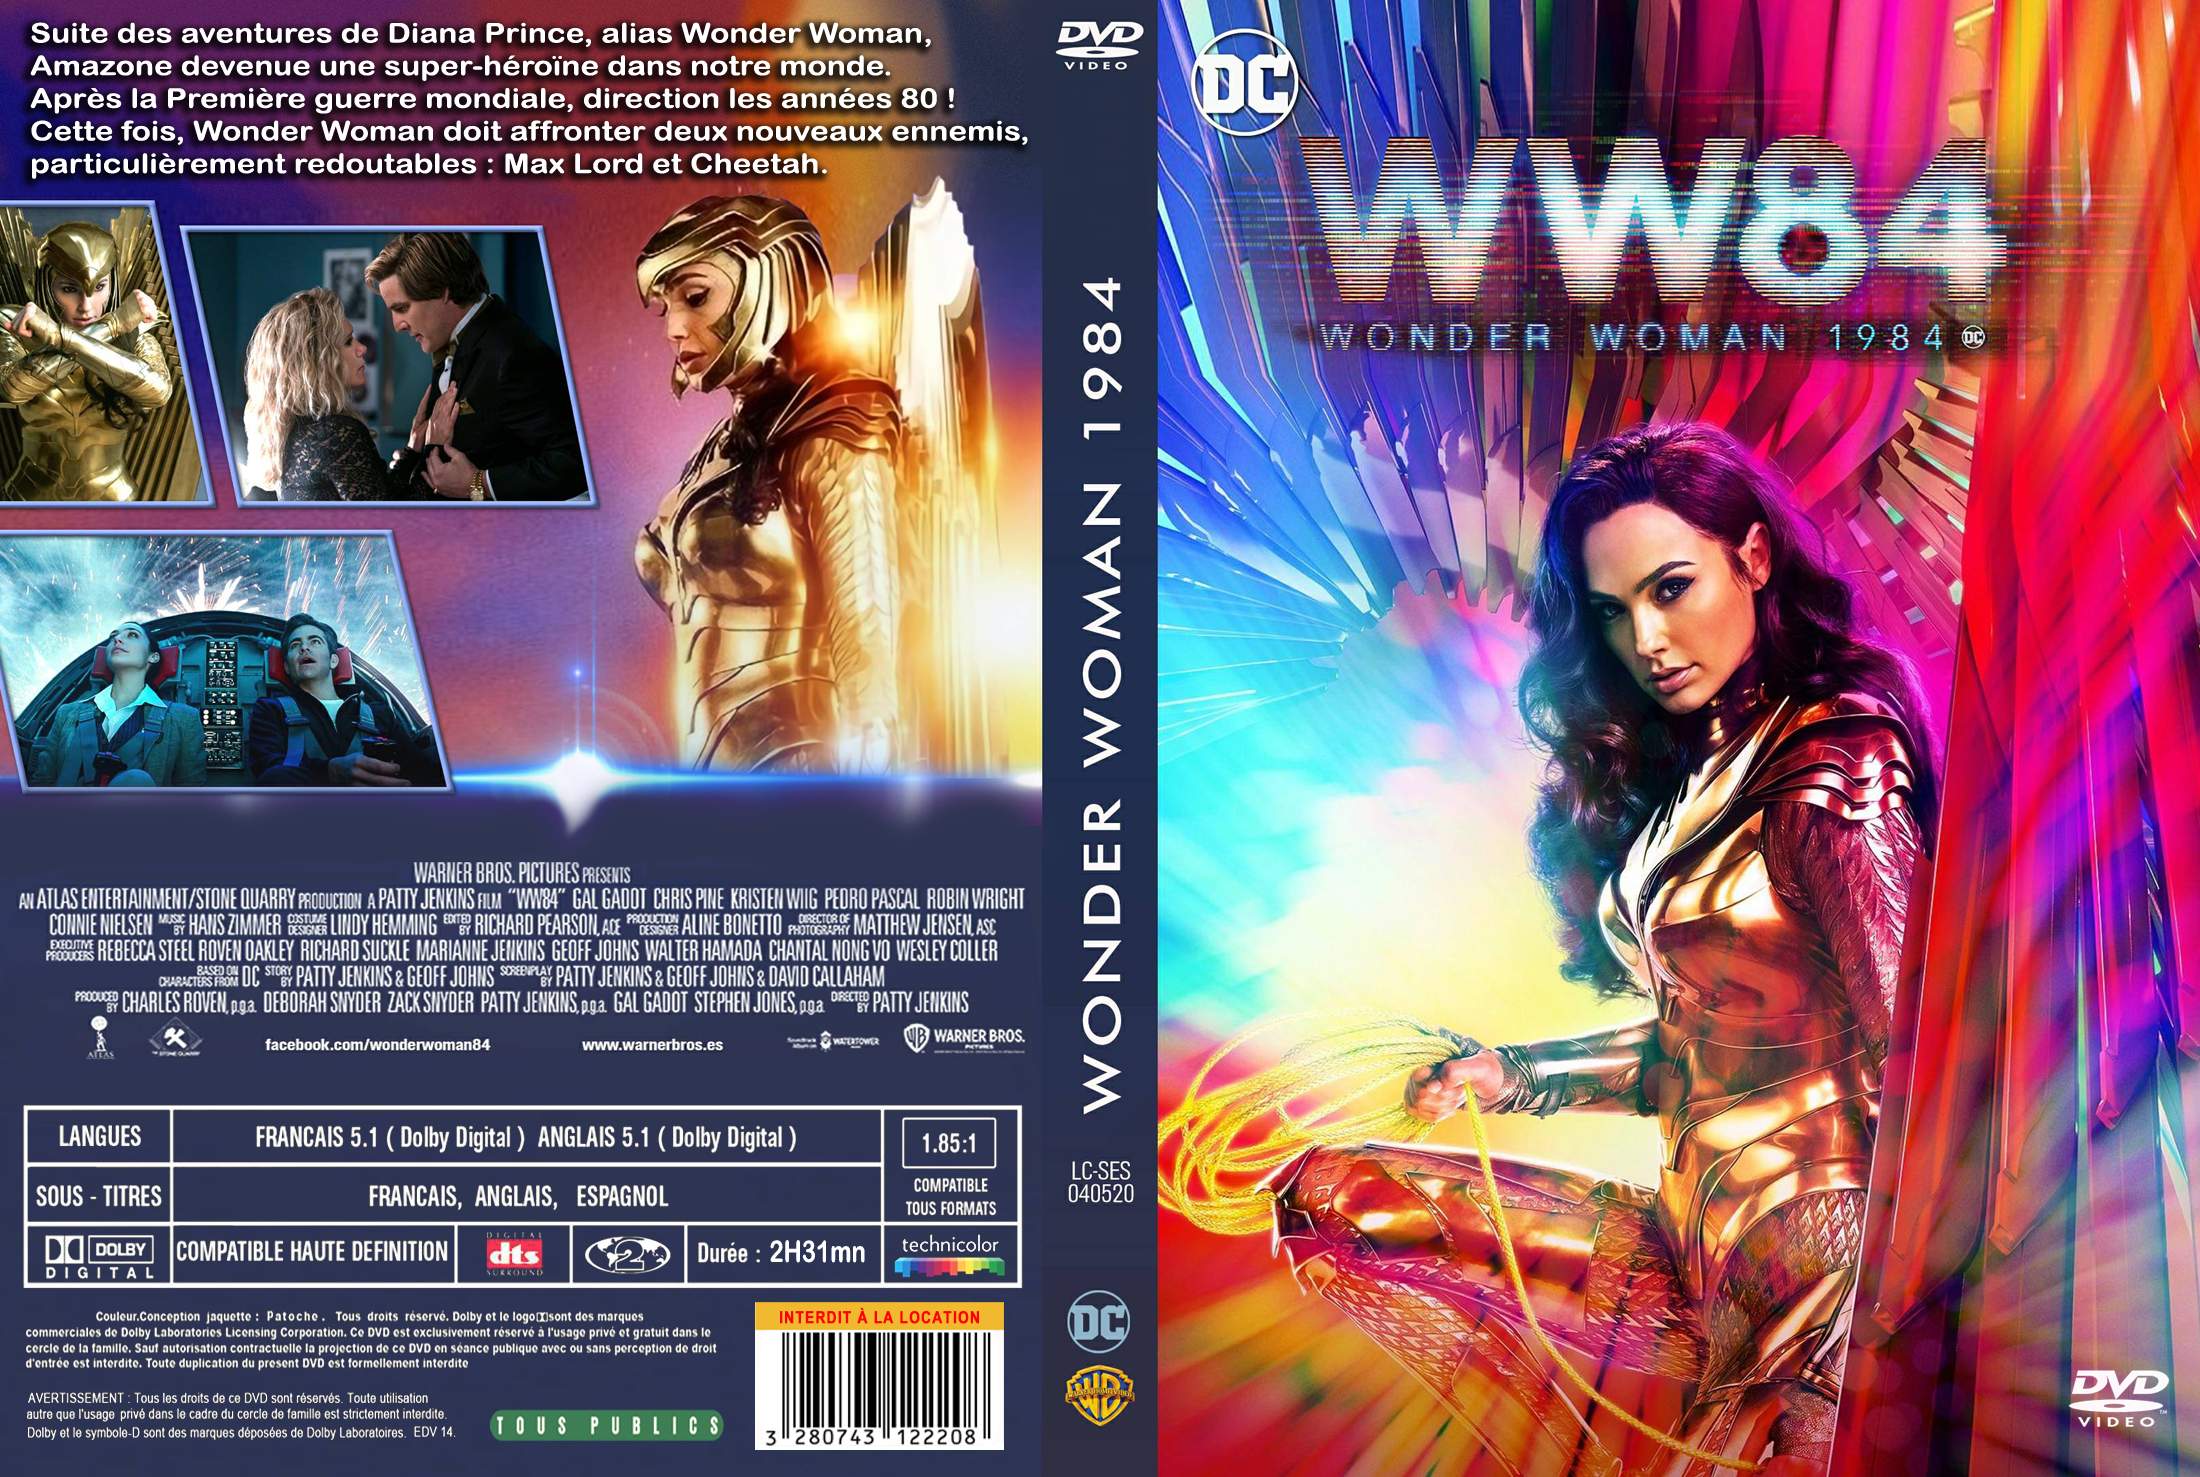 Jaquette DVD Wonder Woman 1984 custom